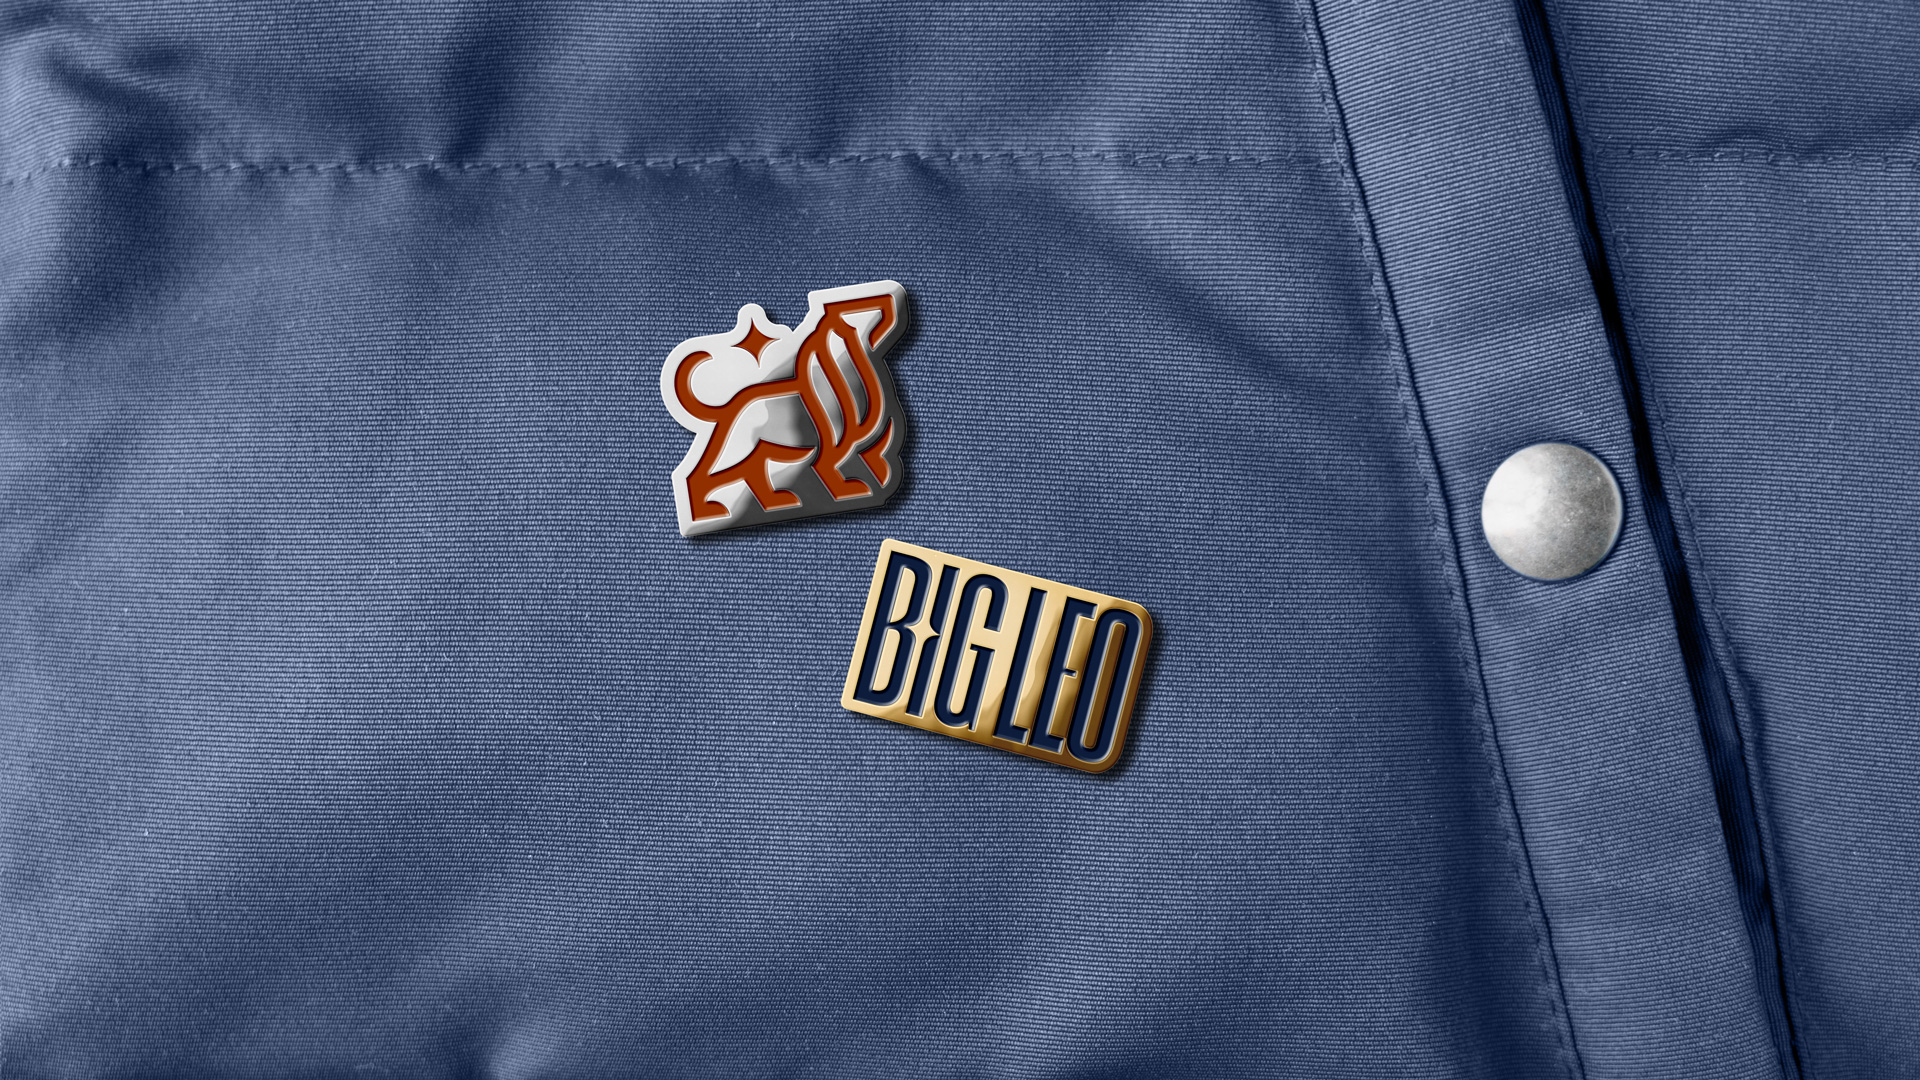 Big Leo enamel pins with wordmark and lion logo.